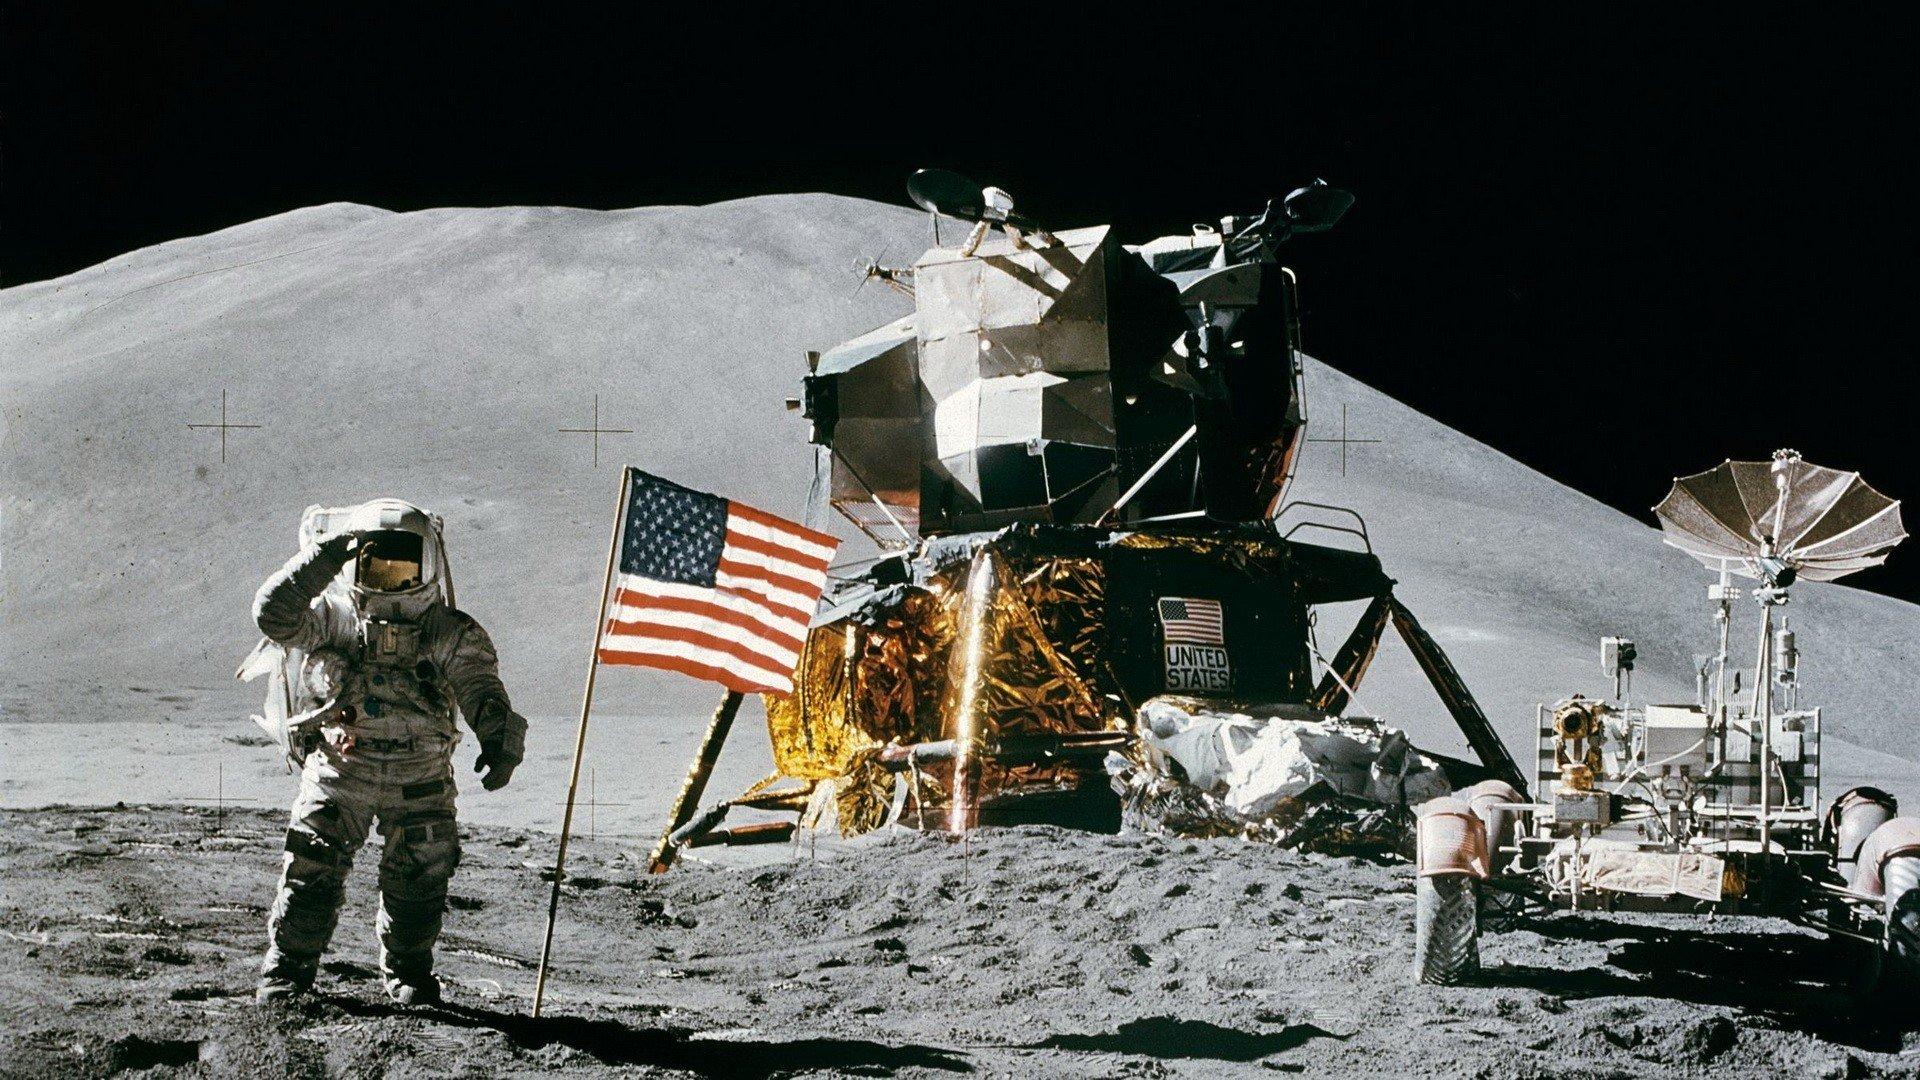 1920x1080 moon astronaut nasa american flag wallpaper